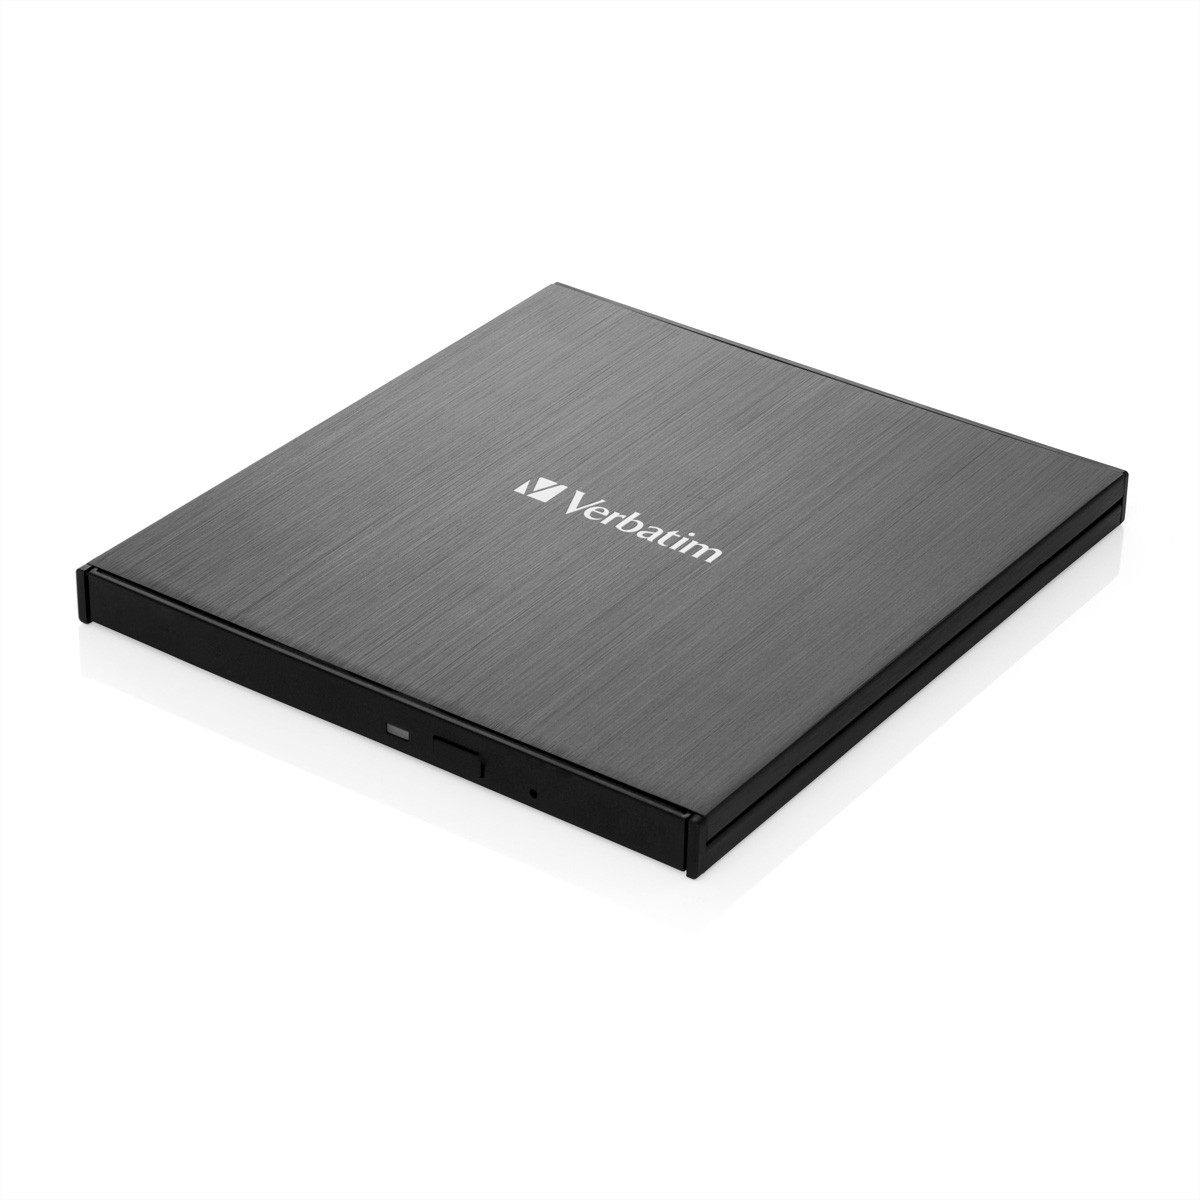 VERBATIM Blu-Ray Recorder, BDXL, USB 3.0, 6x/8x/24x, Slimline portable